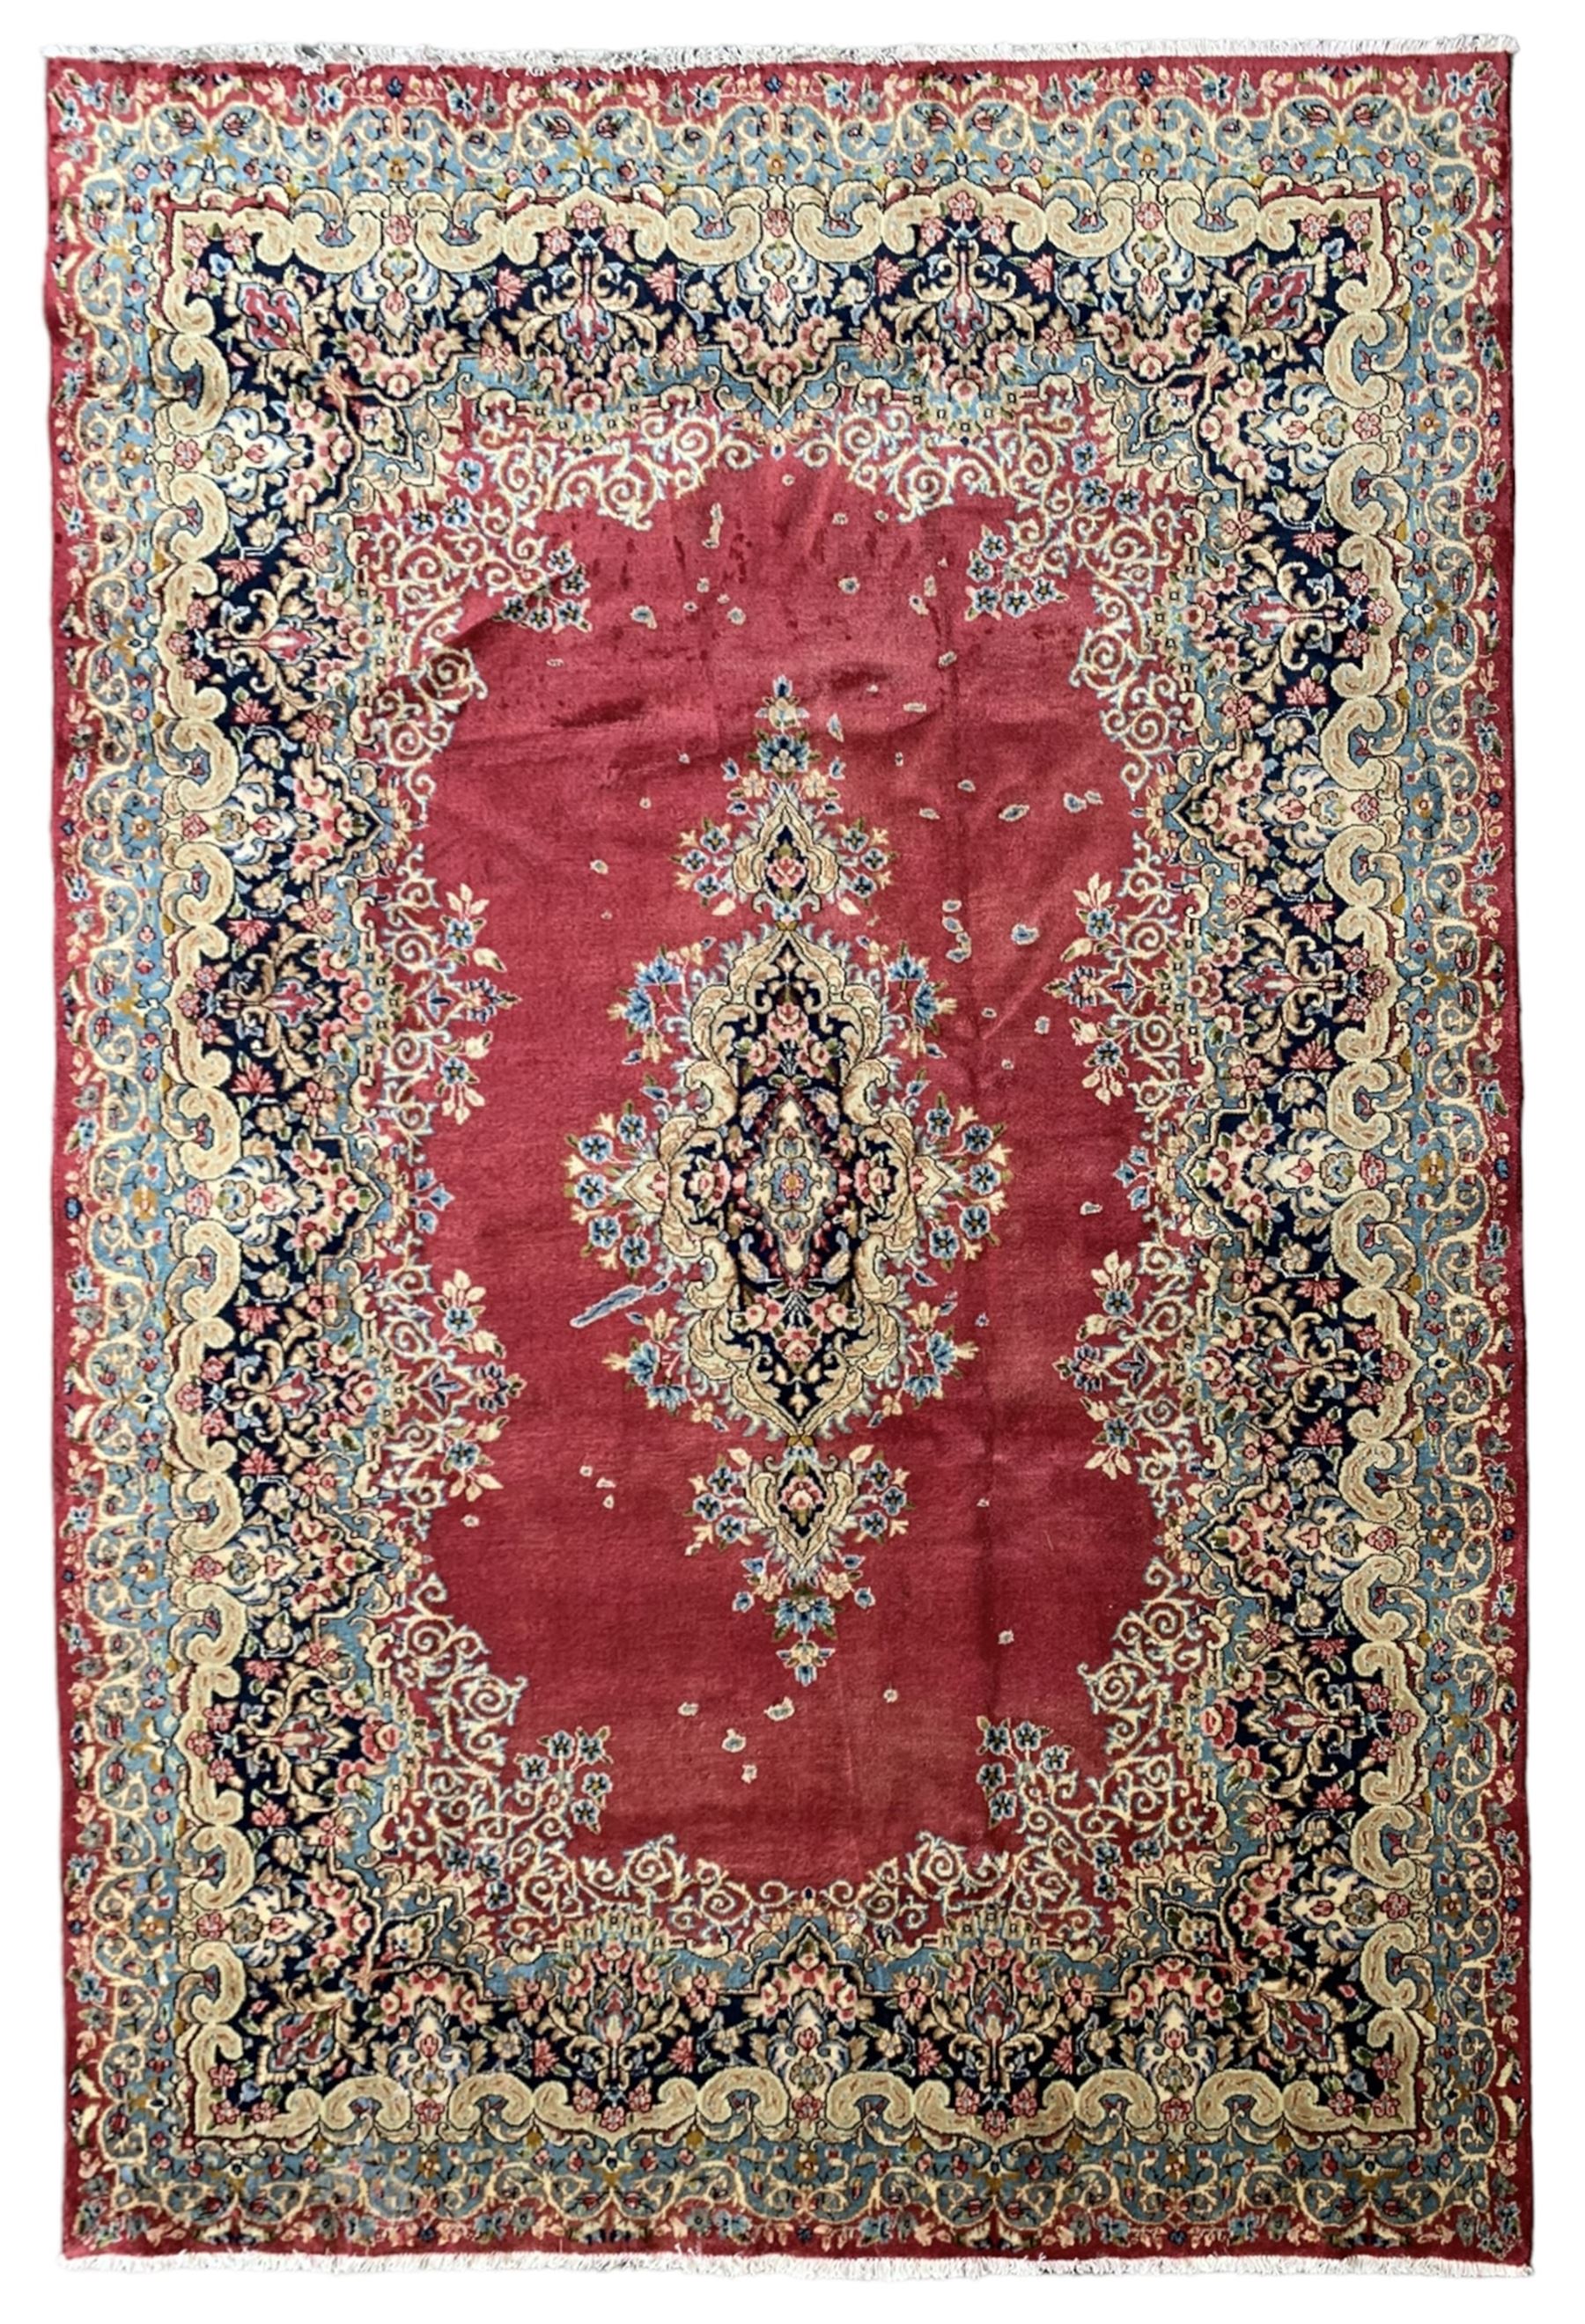 Persian Kerman red ground rug